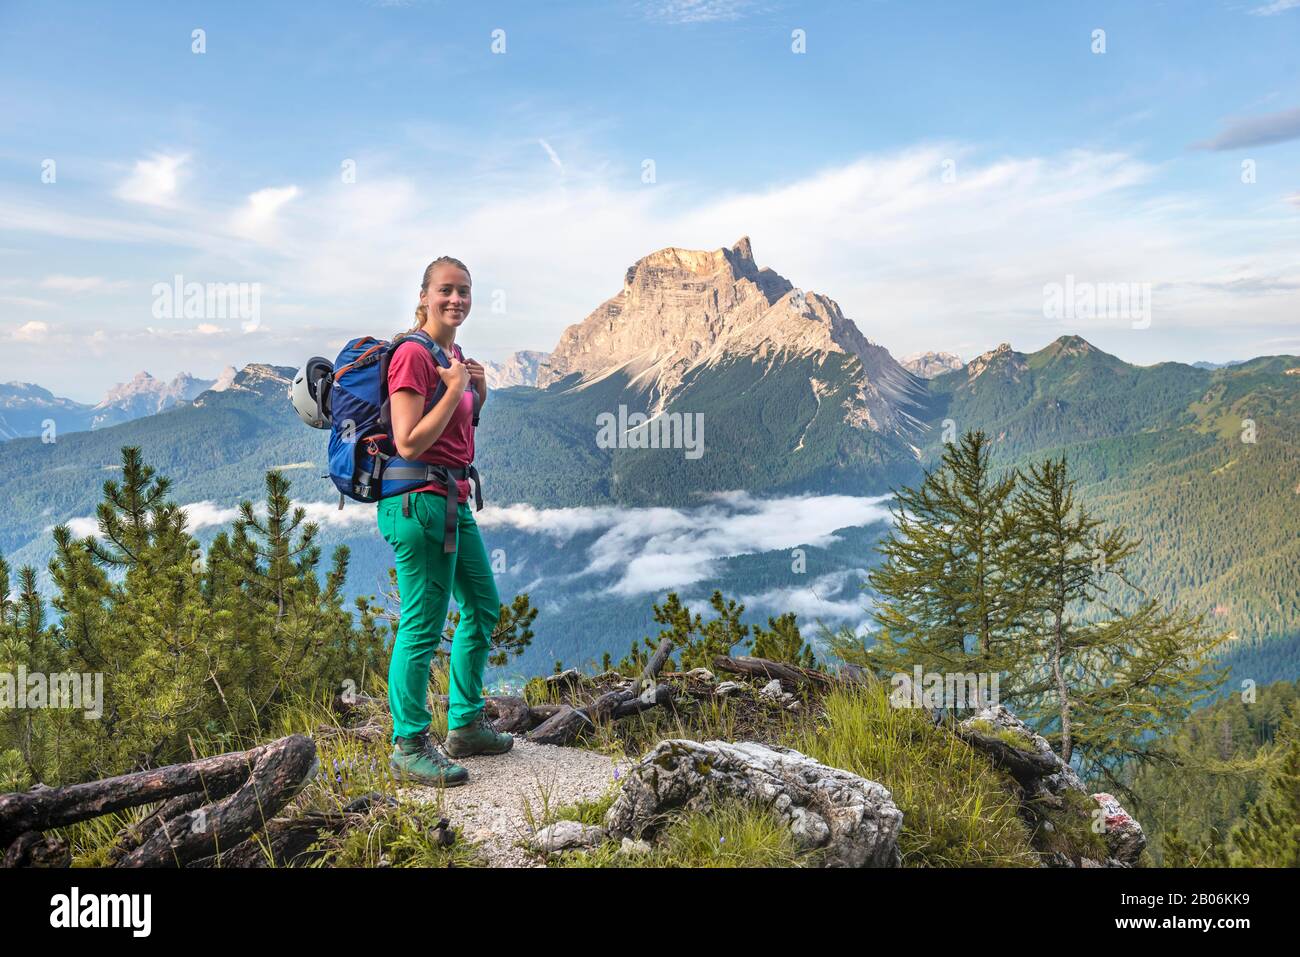 Junge Wanderer blicken in die Kamera, hinter ihrem Berggipfel La Rocheta, in den Dolden, Belluno, Italien Stockfoto